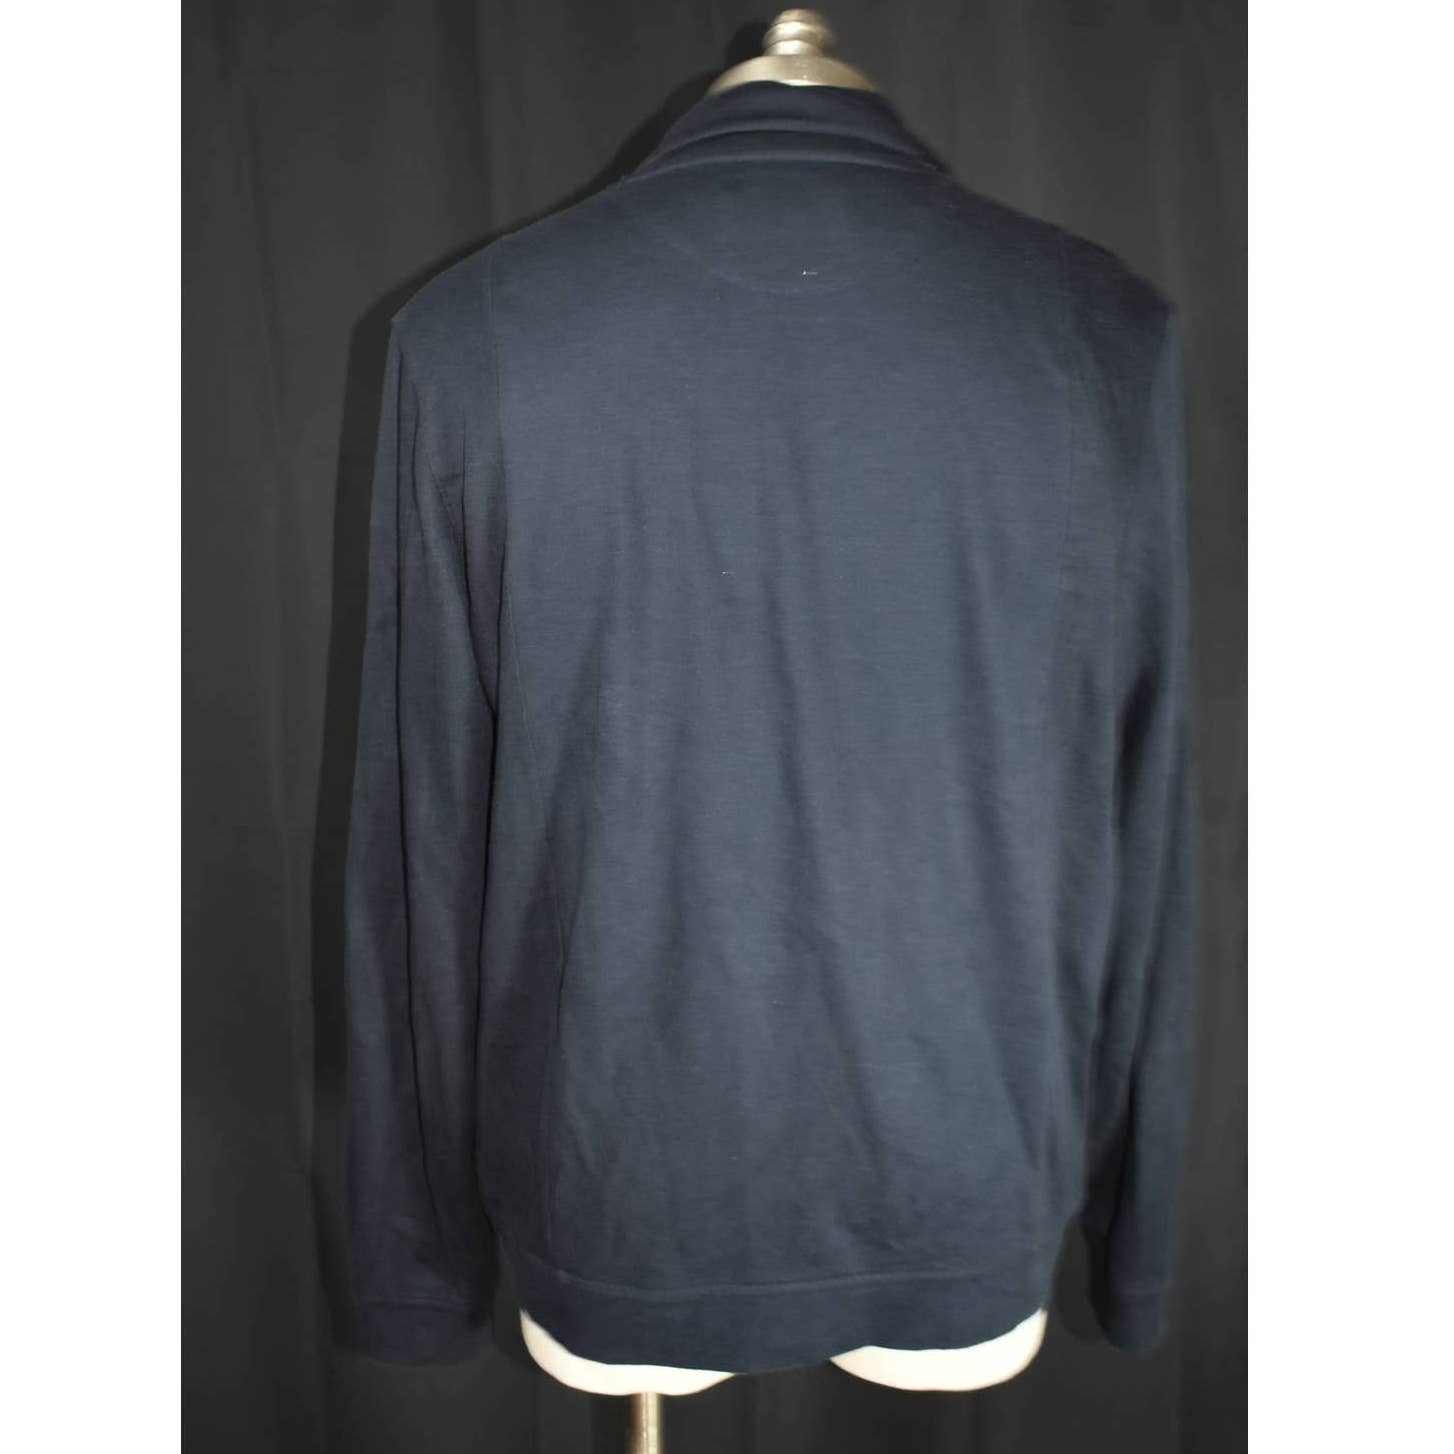 Ted Baker Navy Mock Neck Sweater - 6 - XL